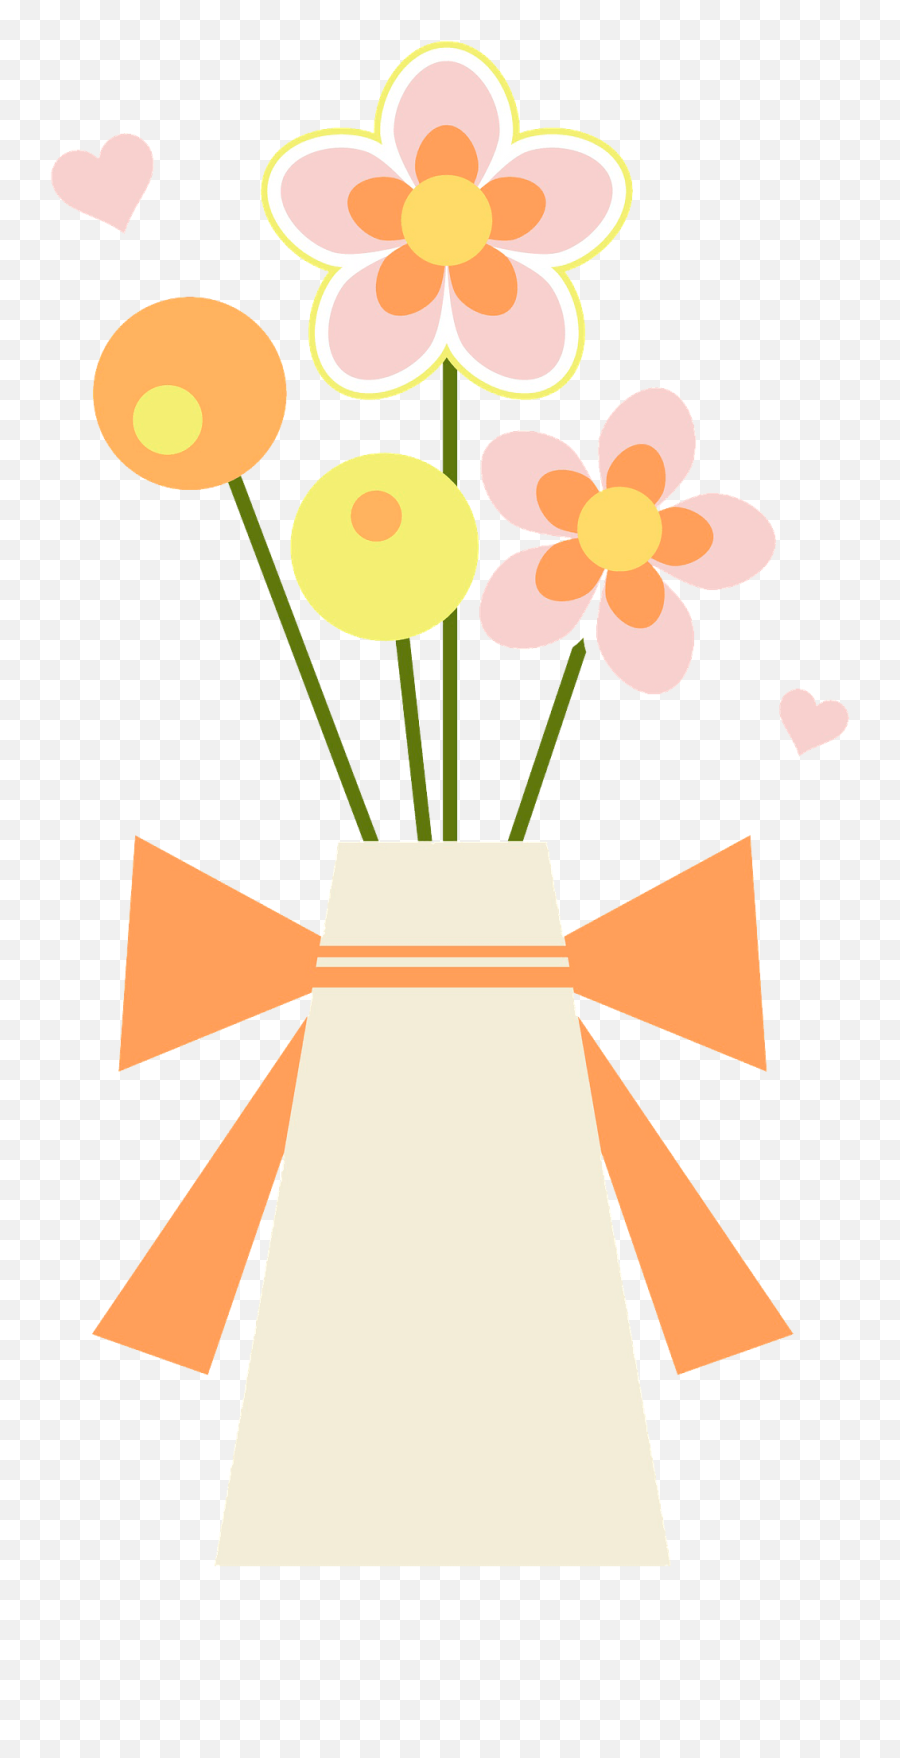 Flowers In A Vase Clipart Free Download Transparent Png - Dot Emoji,Vase Clipart